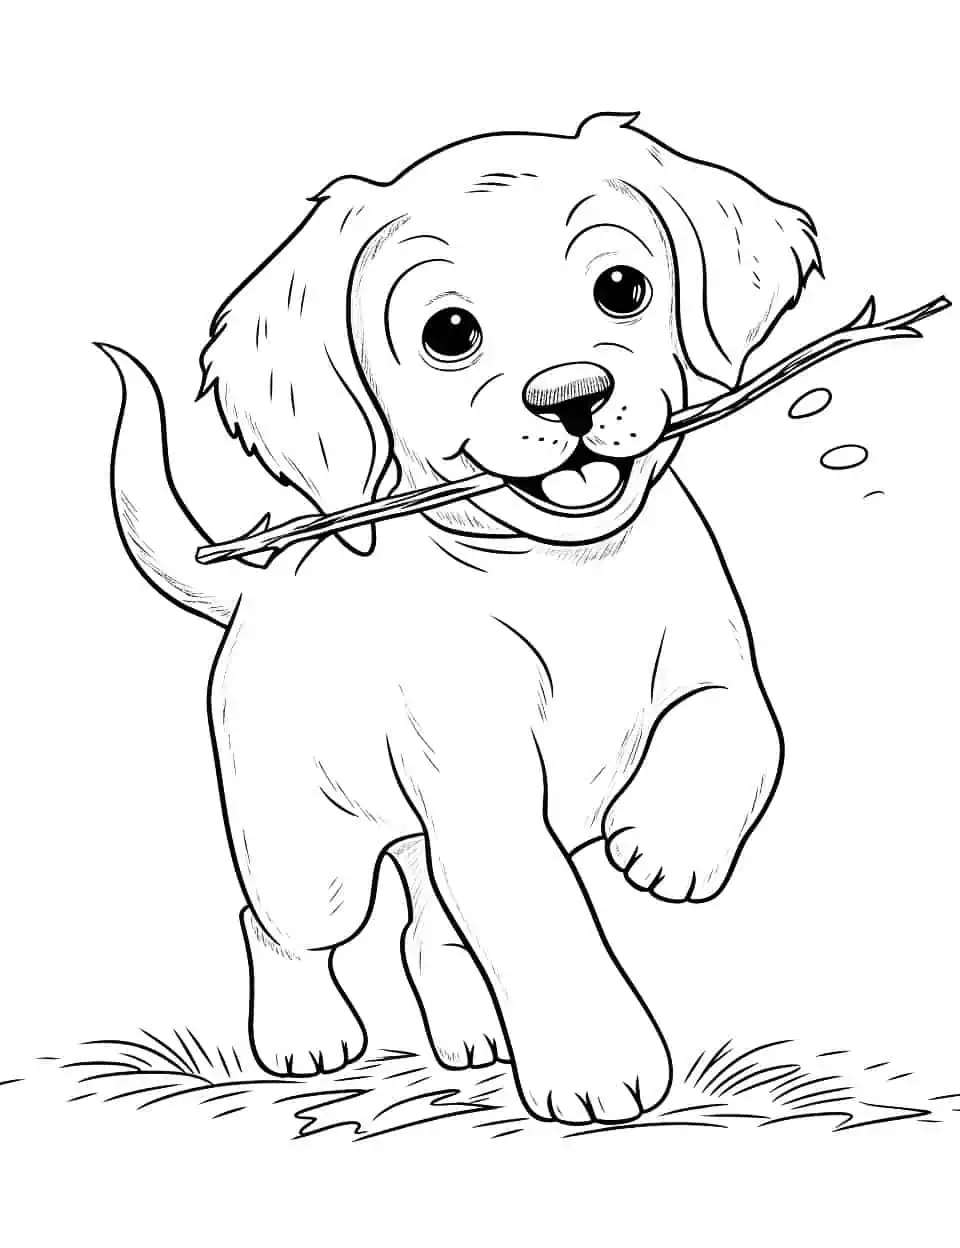 Golden Retriever Fetch Dog Coloring Page - A Golden Retriever happily fetching a stick.